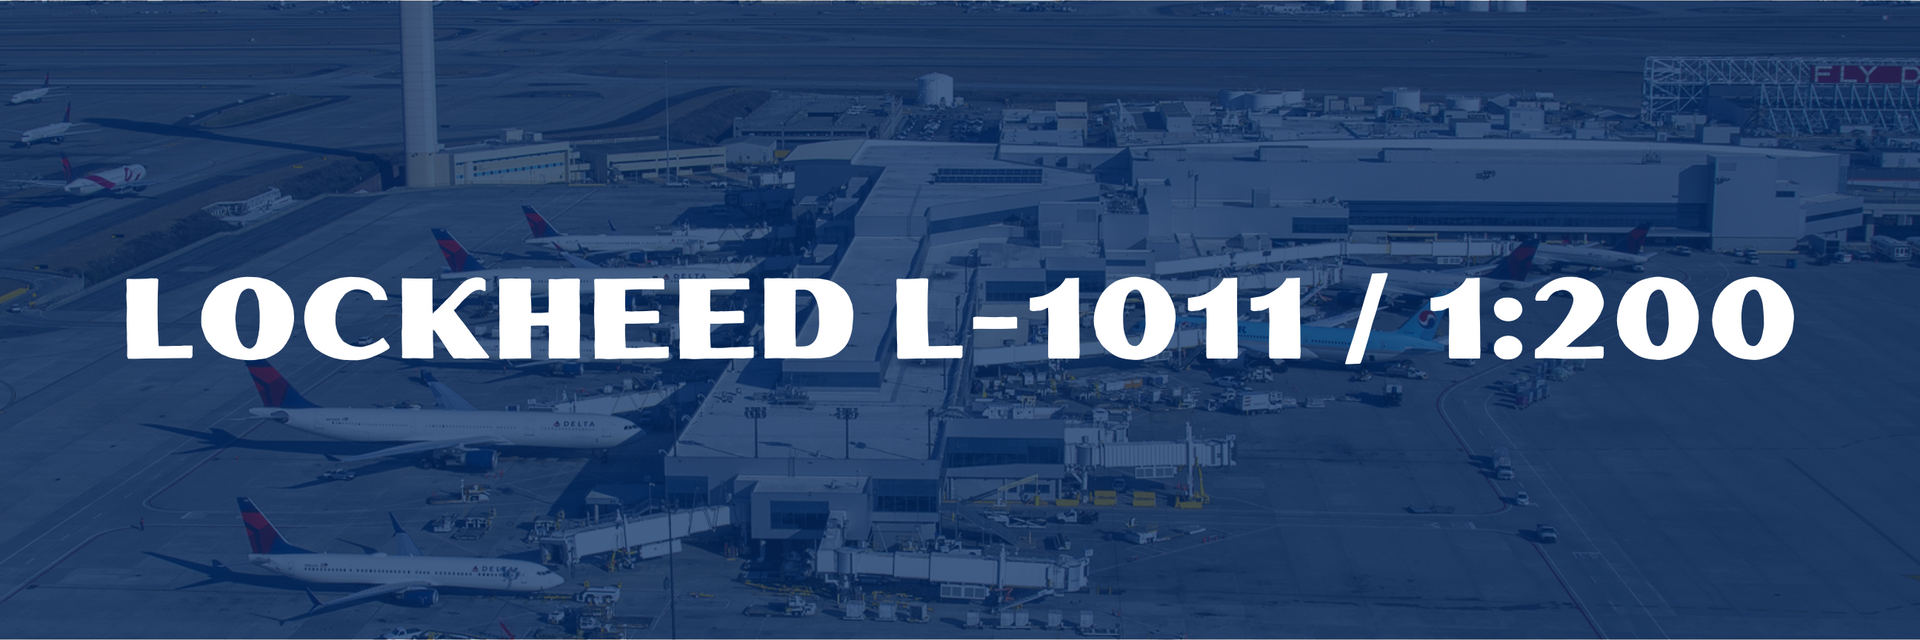 Lockheed L‐1011 / 1:200